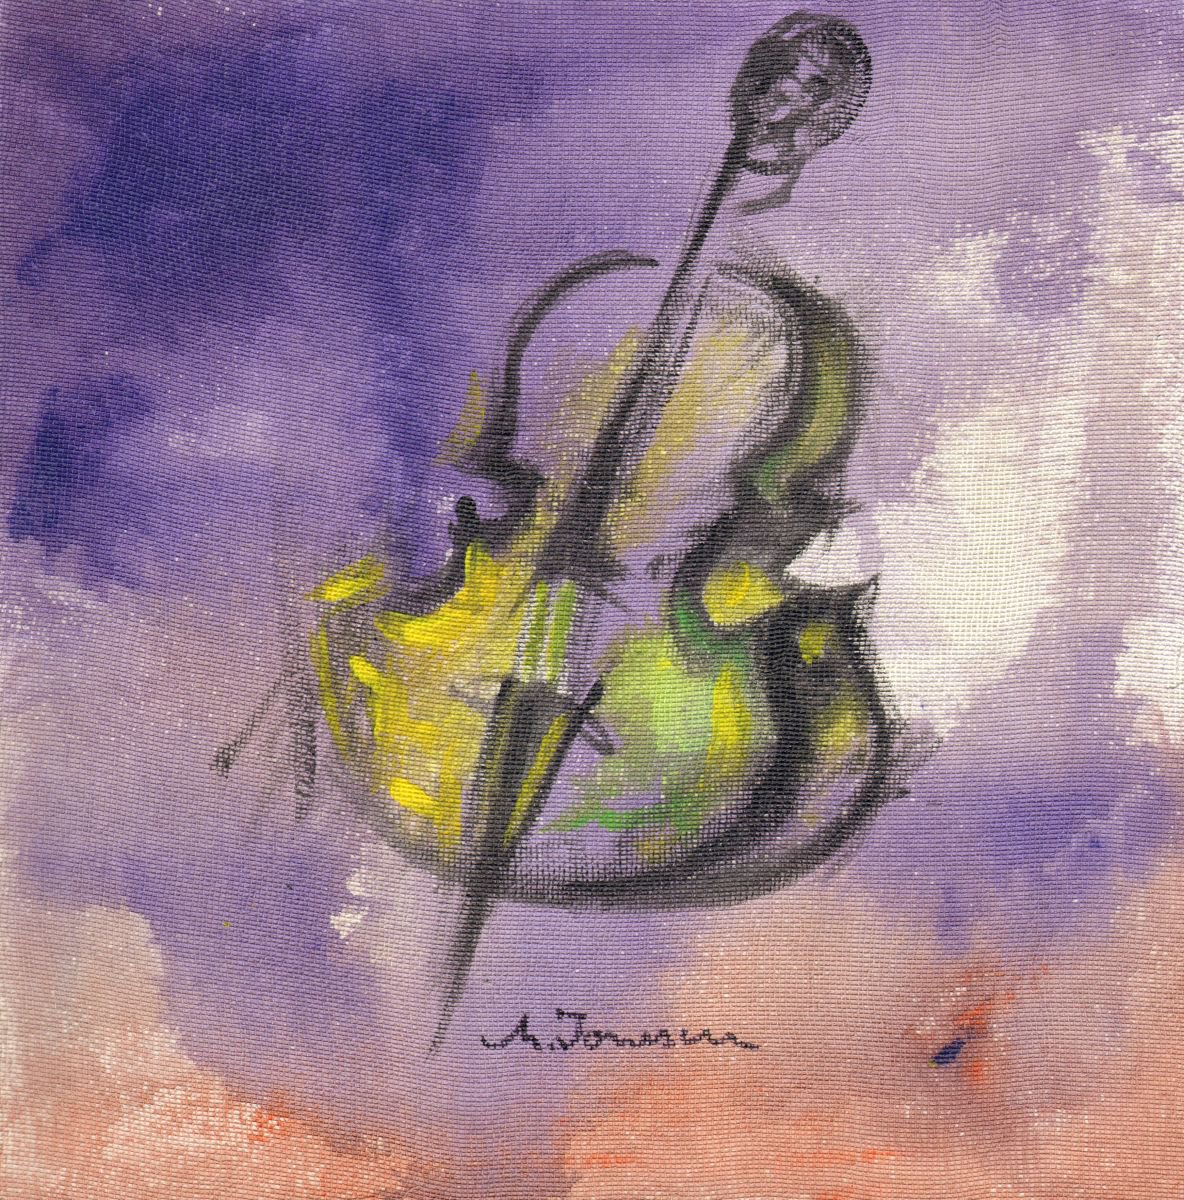 Violet Cello by Mihaela Ionescu